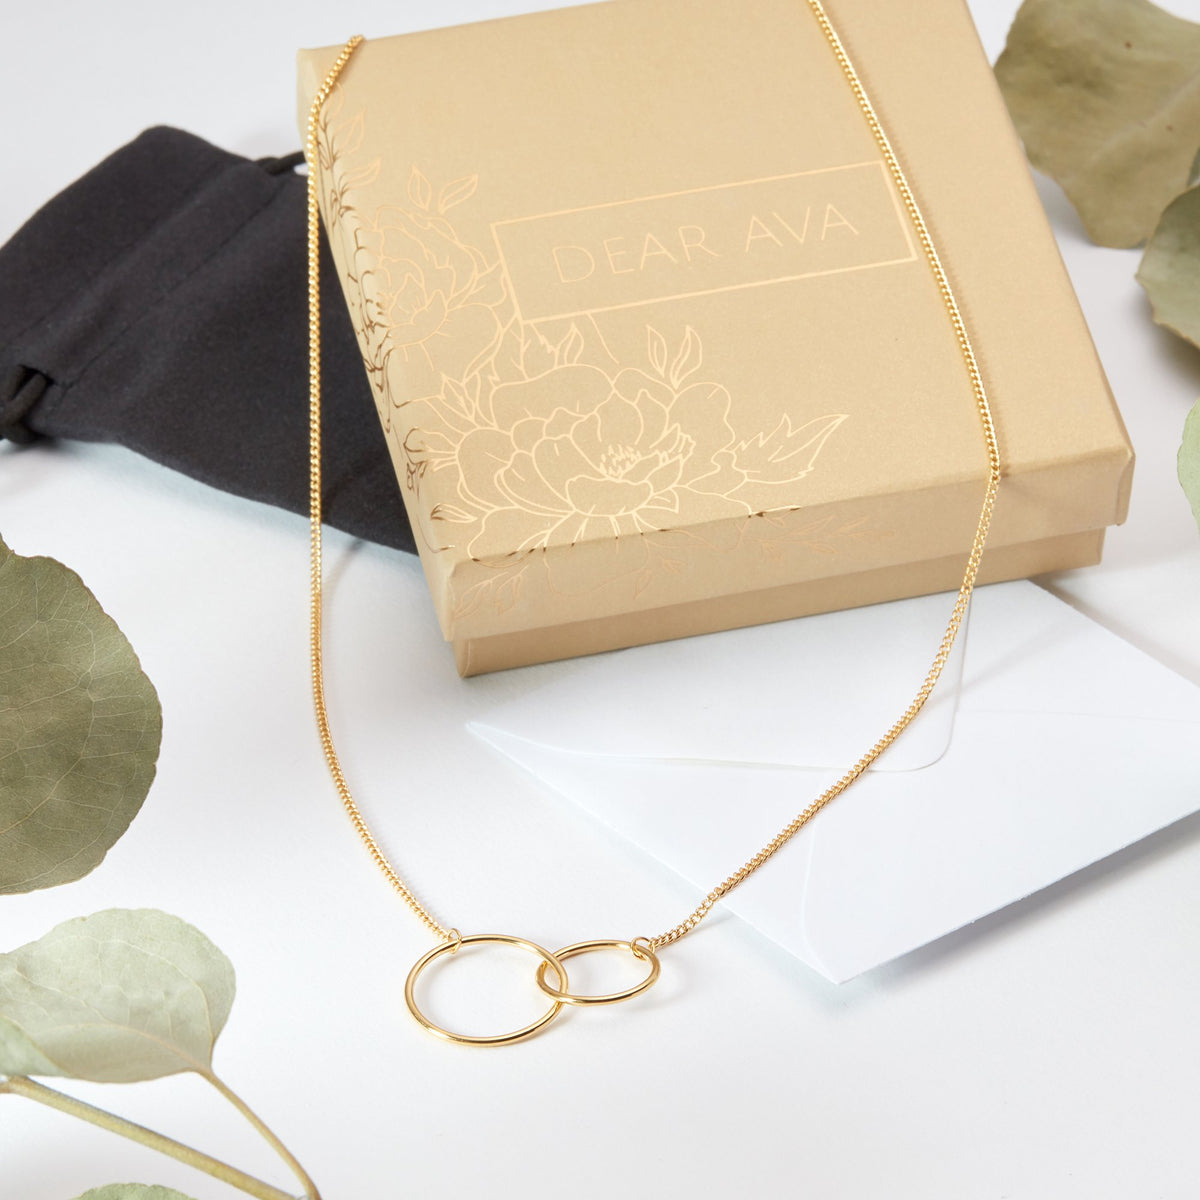 Aquarius Zodiac Gift Necklace - Dear Ava, Jewelry / Necklaces / Pendants